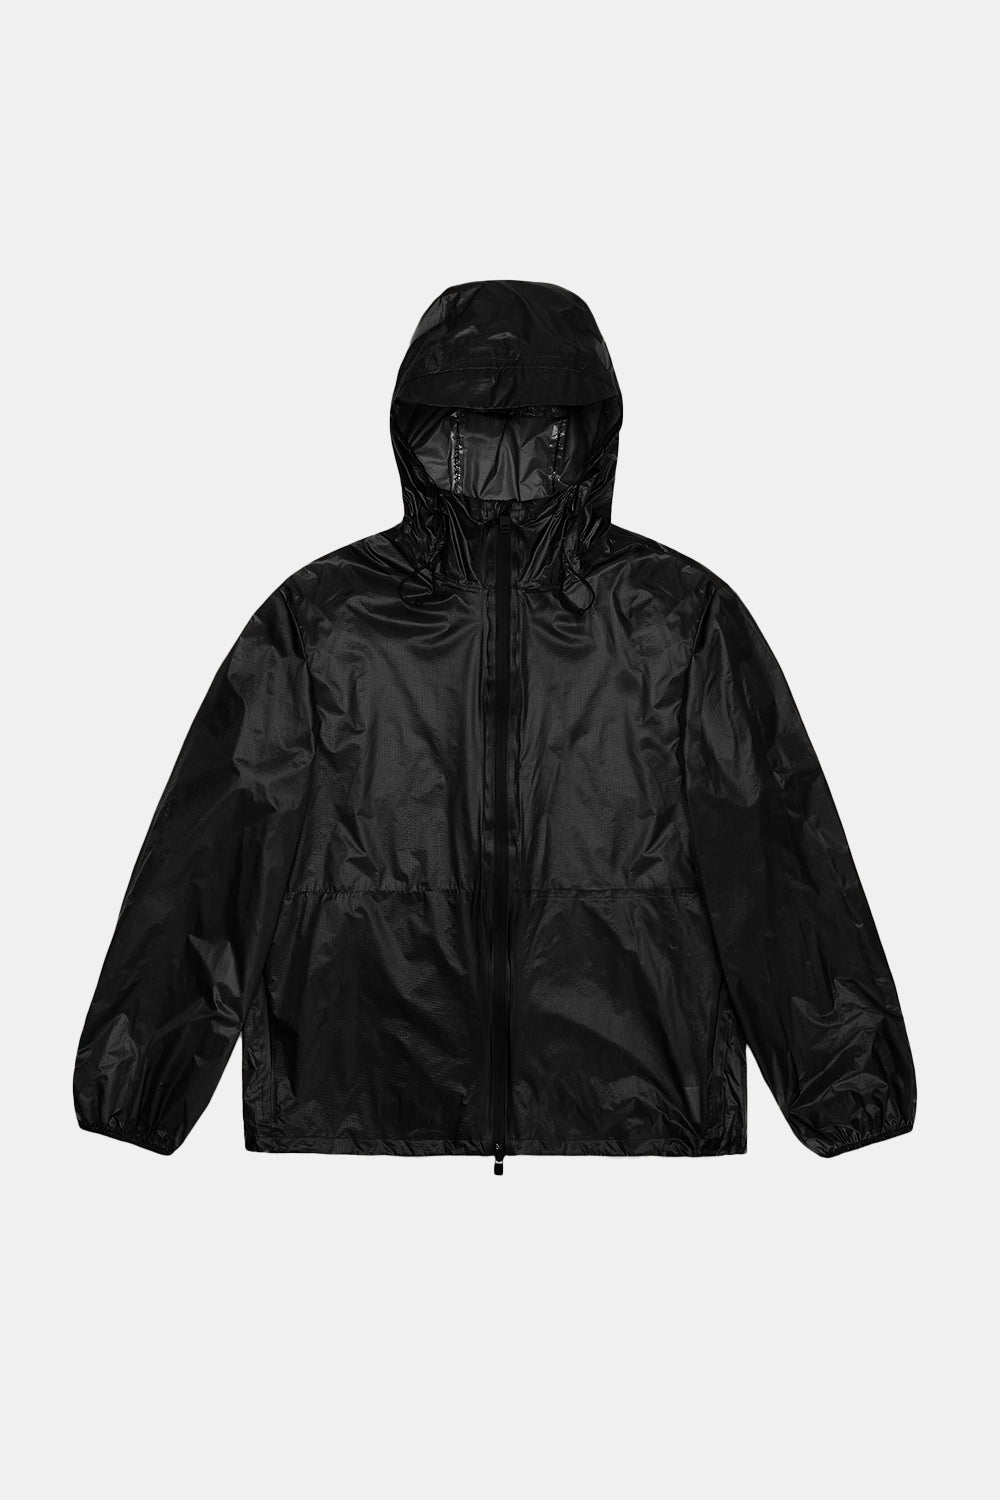 Rains Norton Jacket (Black)
